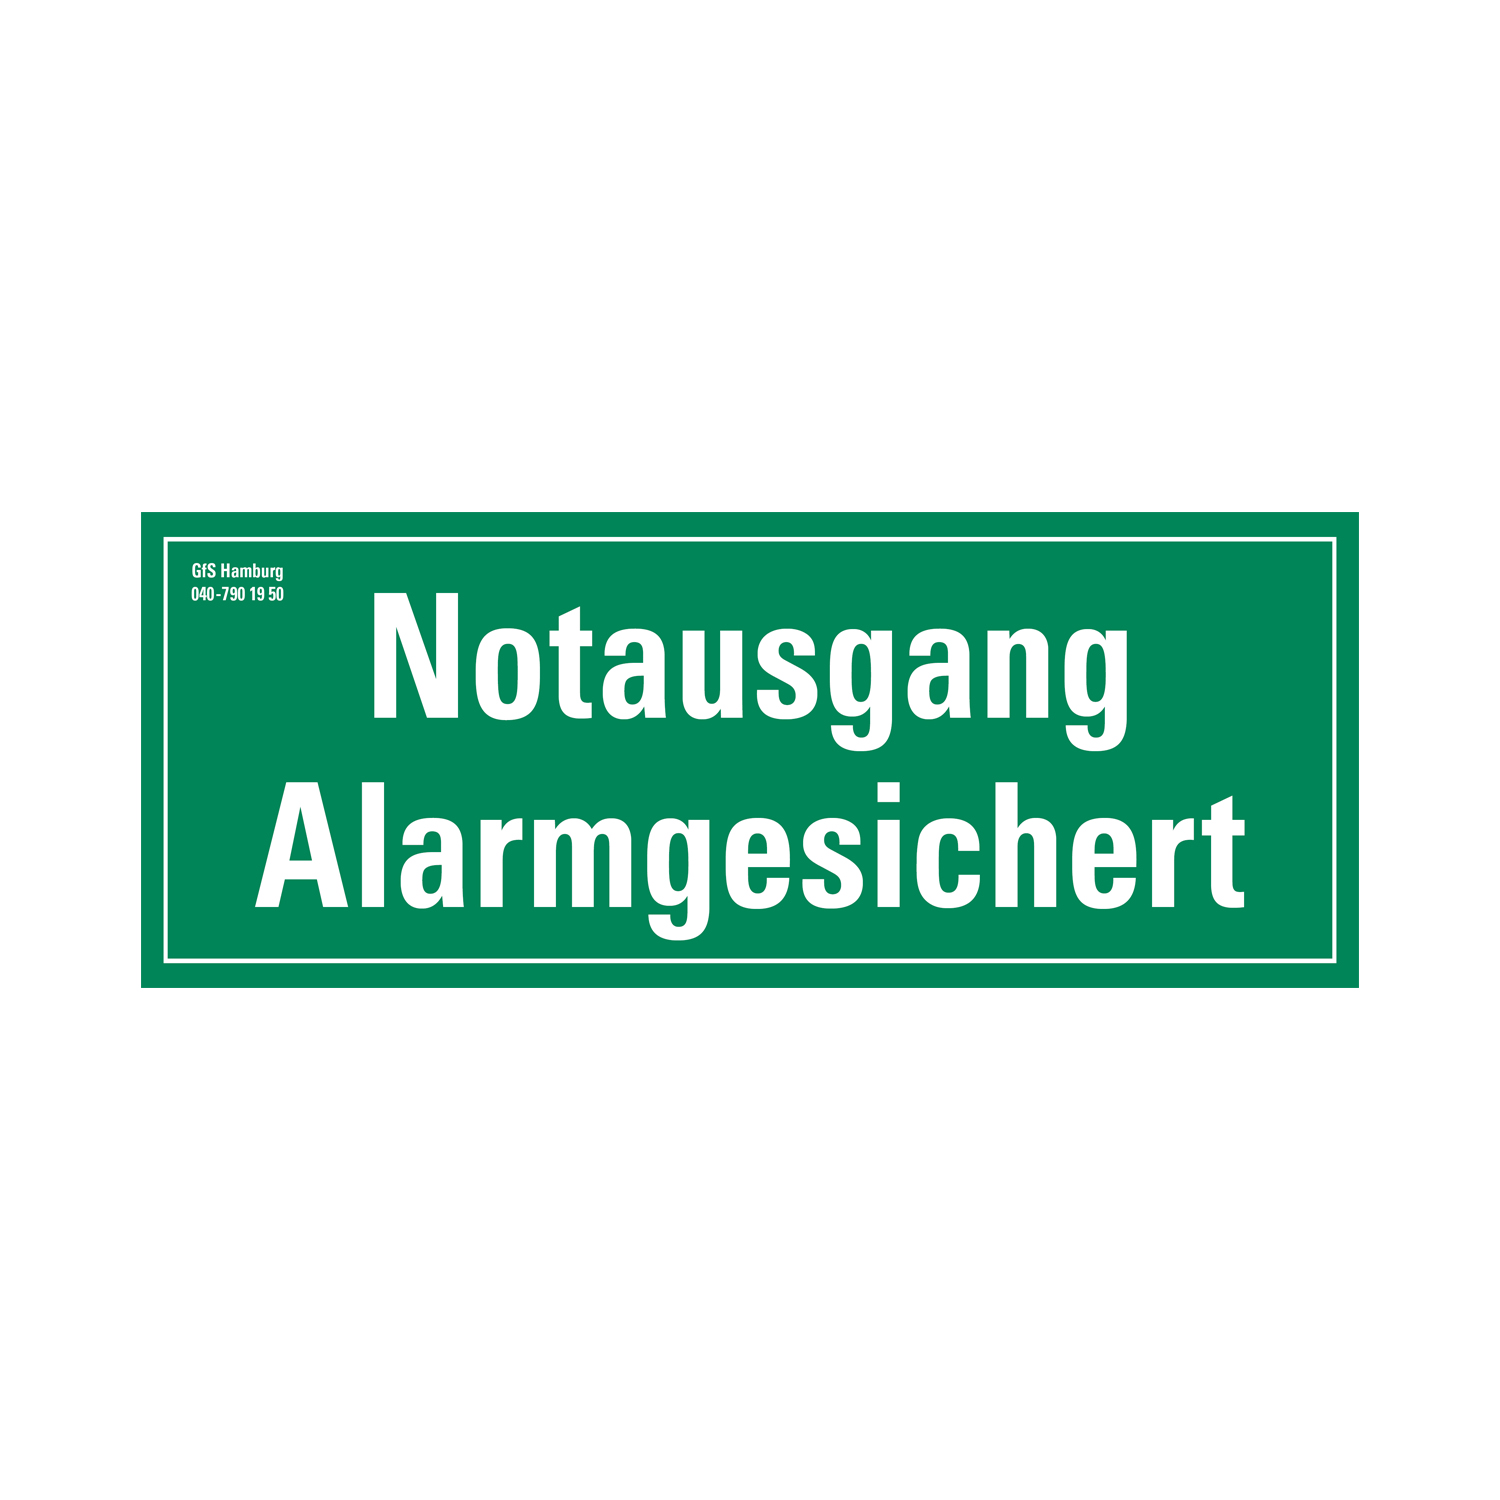 Schild "Notausgang Alarmgesichert" Folie, 297 x 105 mm, grün